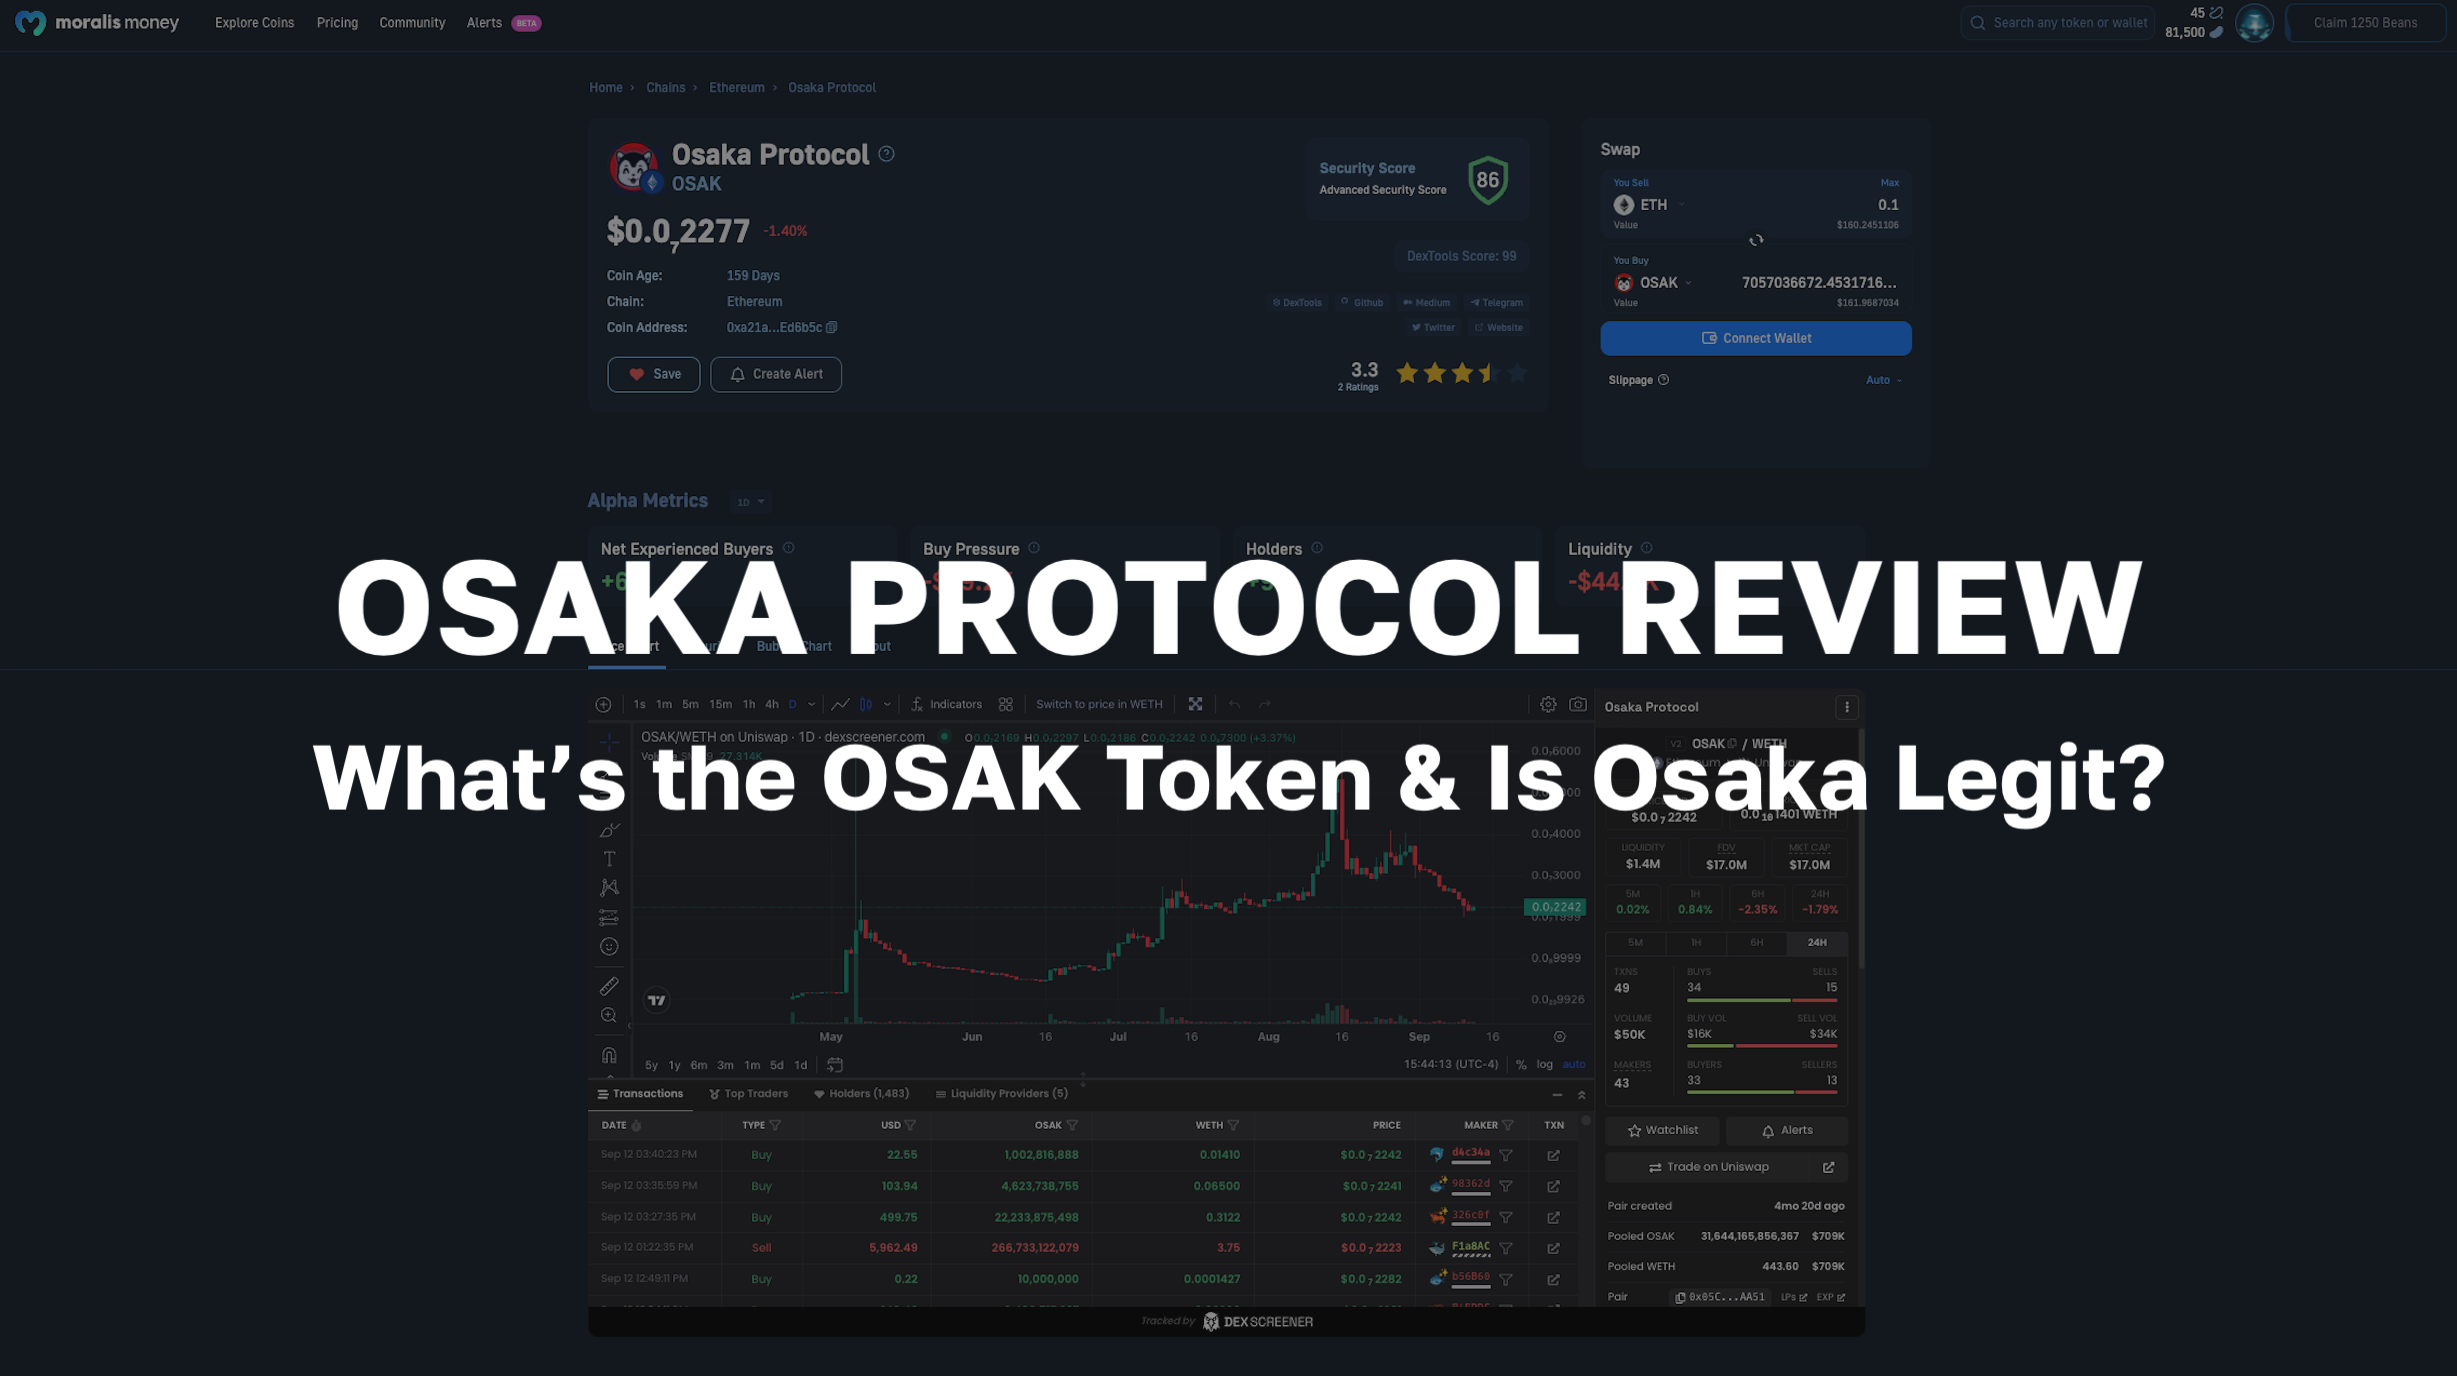 Osaka Protocol Review - What's the OSAK Token & Is Osaka Legit?